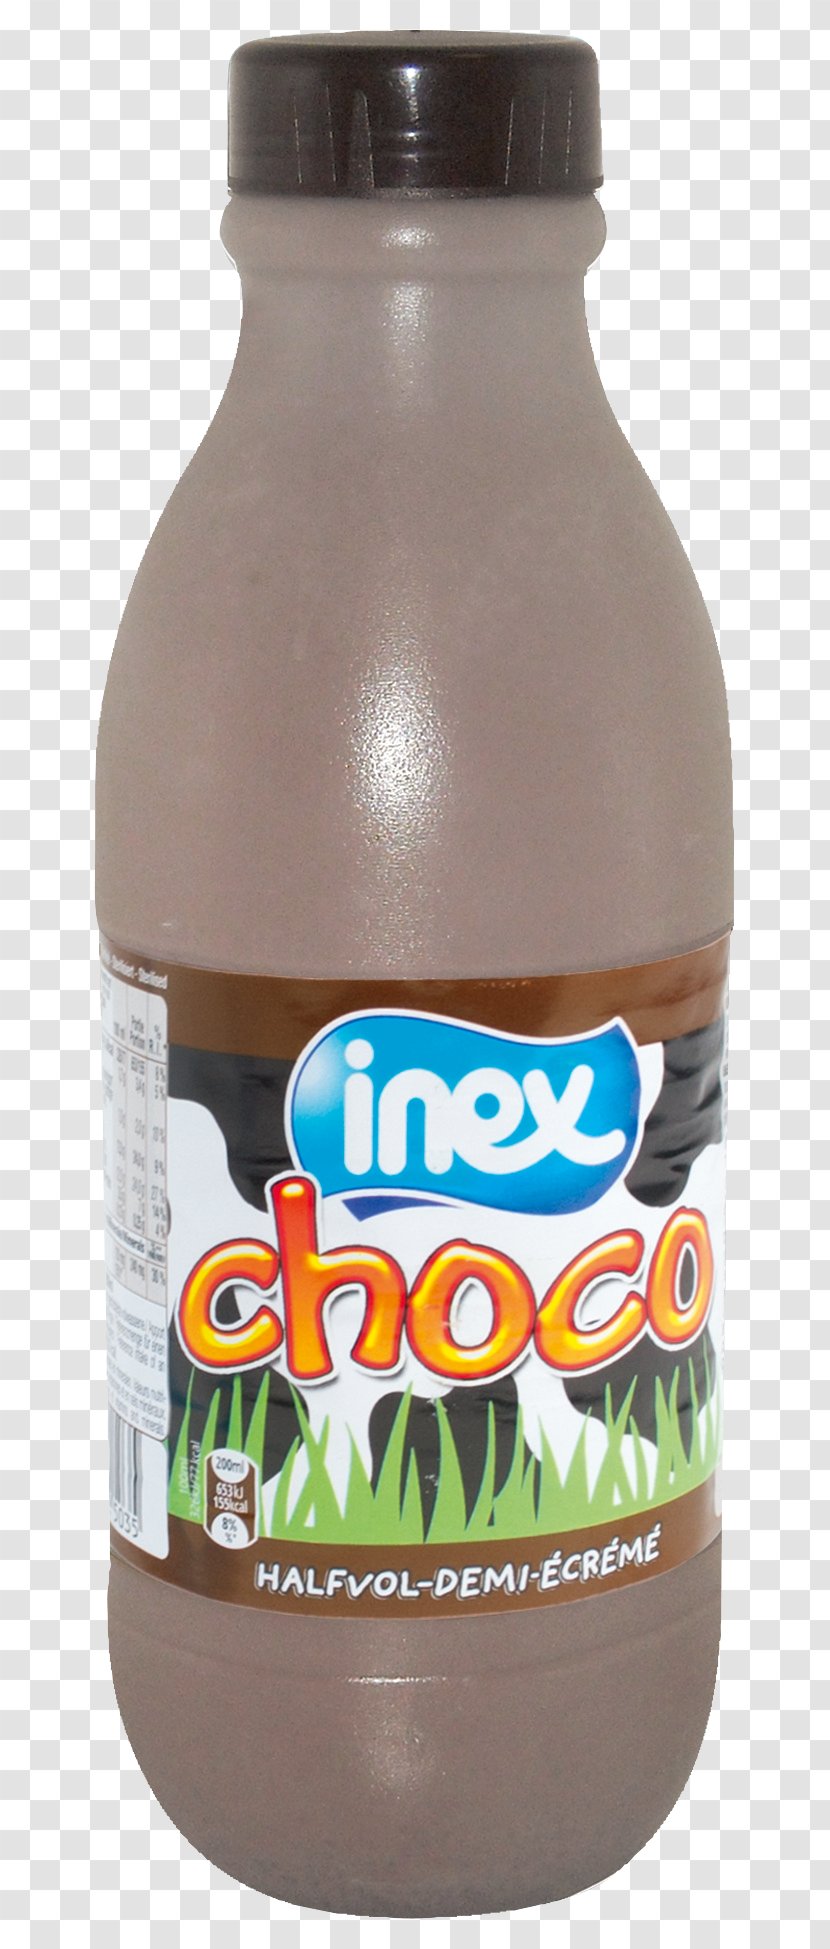 Chocolate Milk Bottle Reduced Fat Cream - Cocoa Bean Transparent PNG